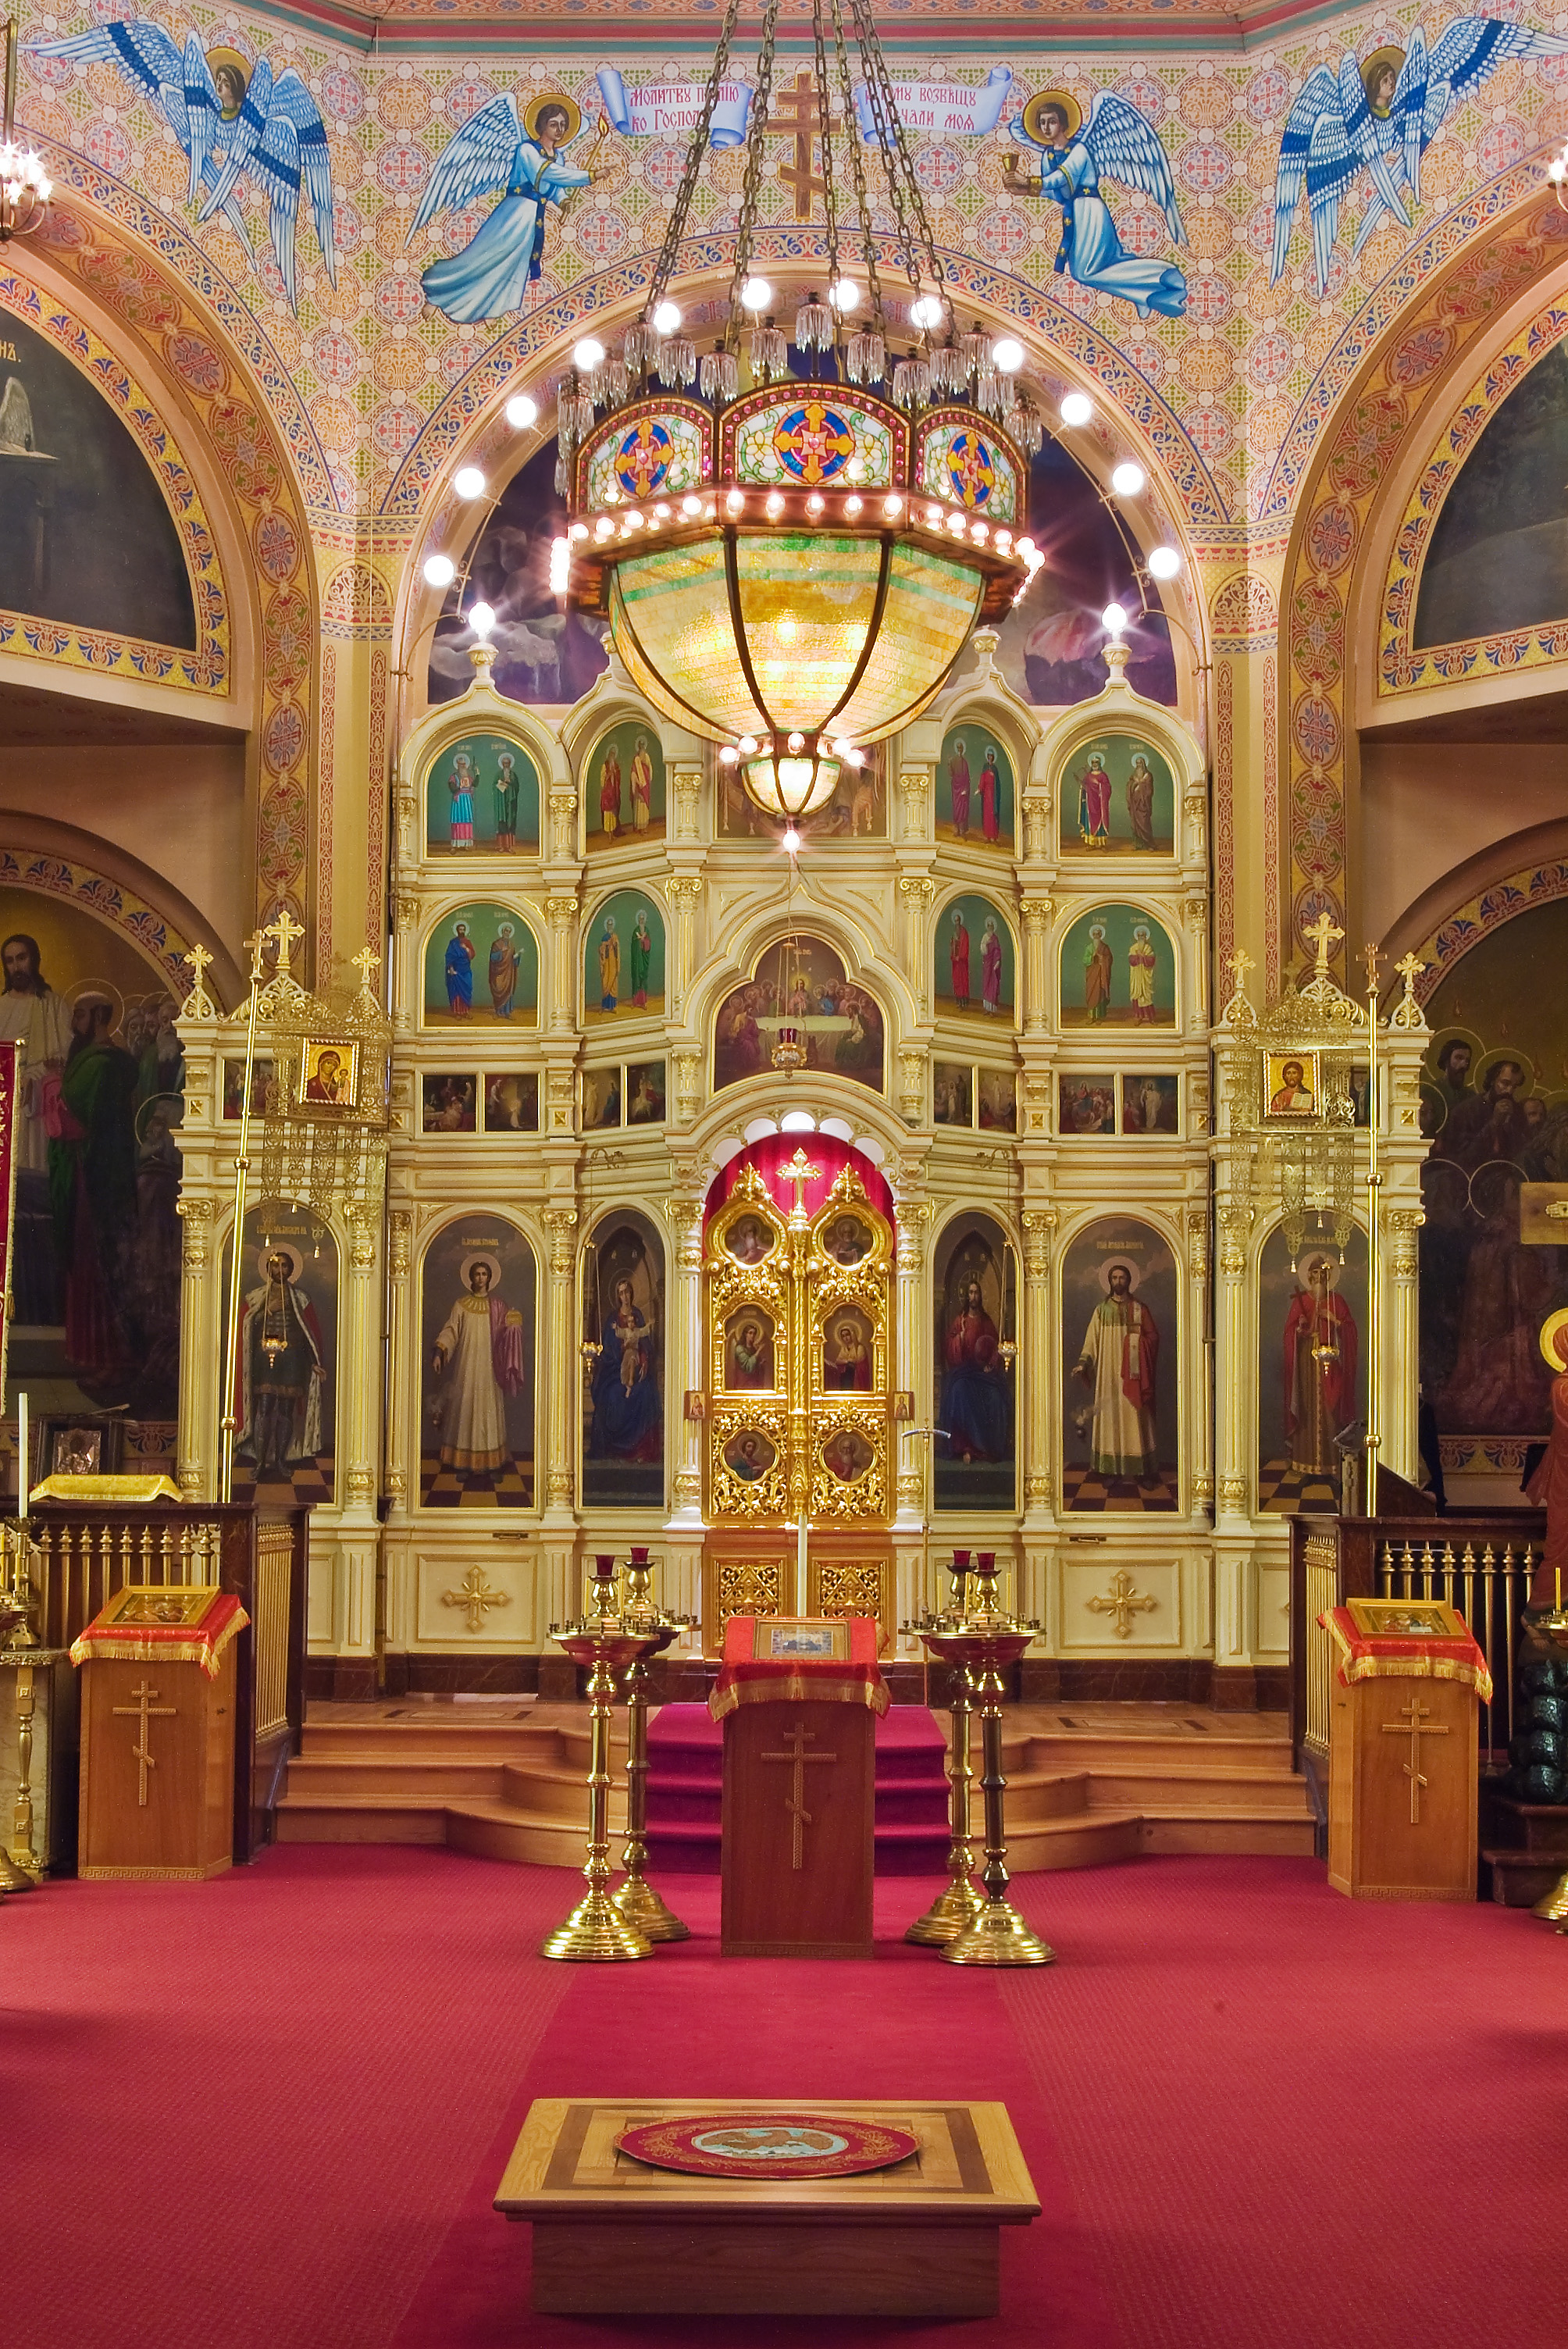 Holy Trinity Russian Orthodox Church 071215